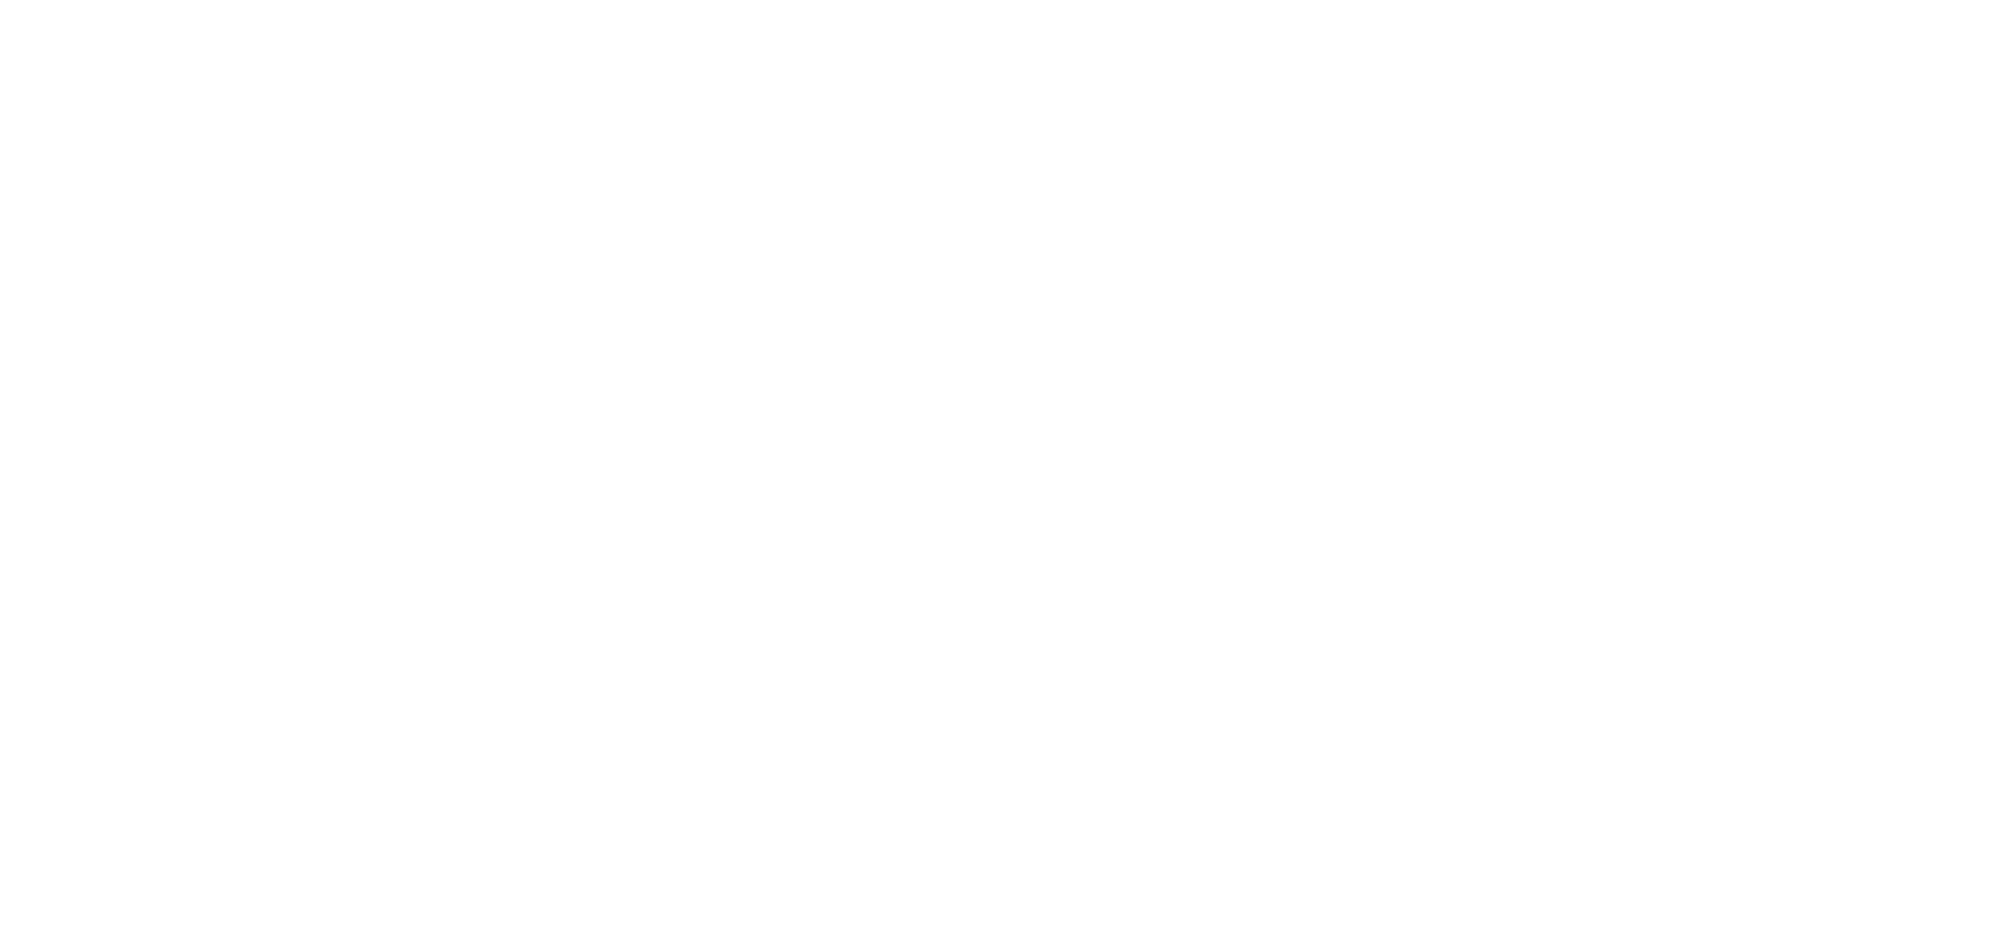 CRAYFISH CLAY STUDIO